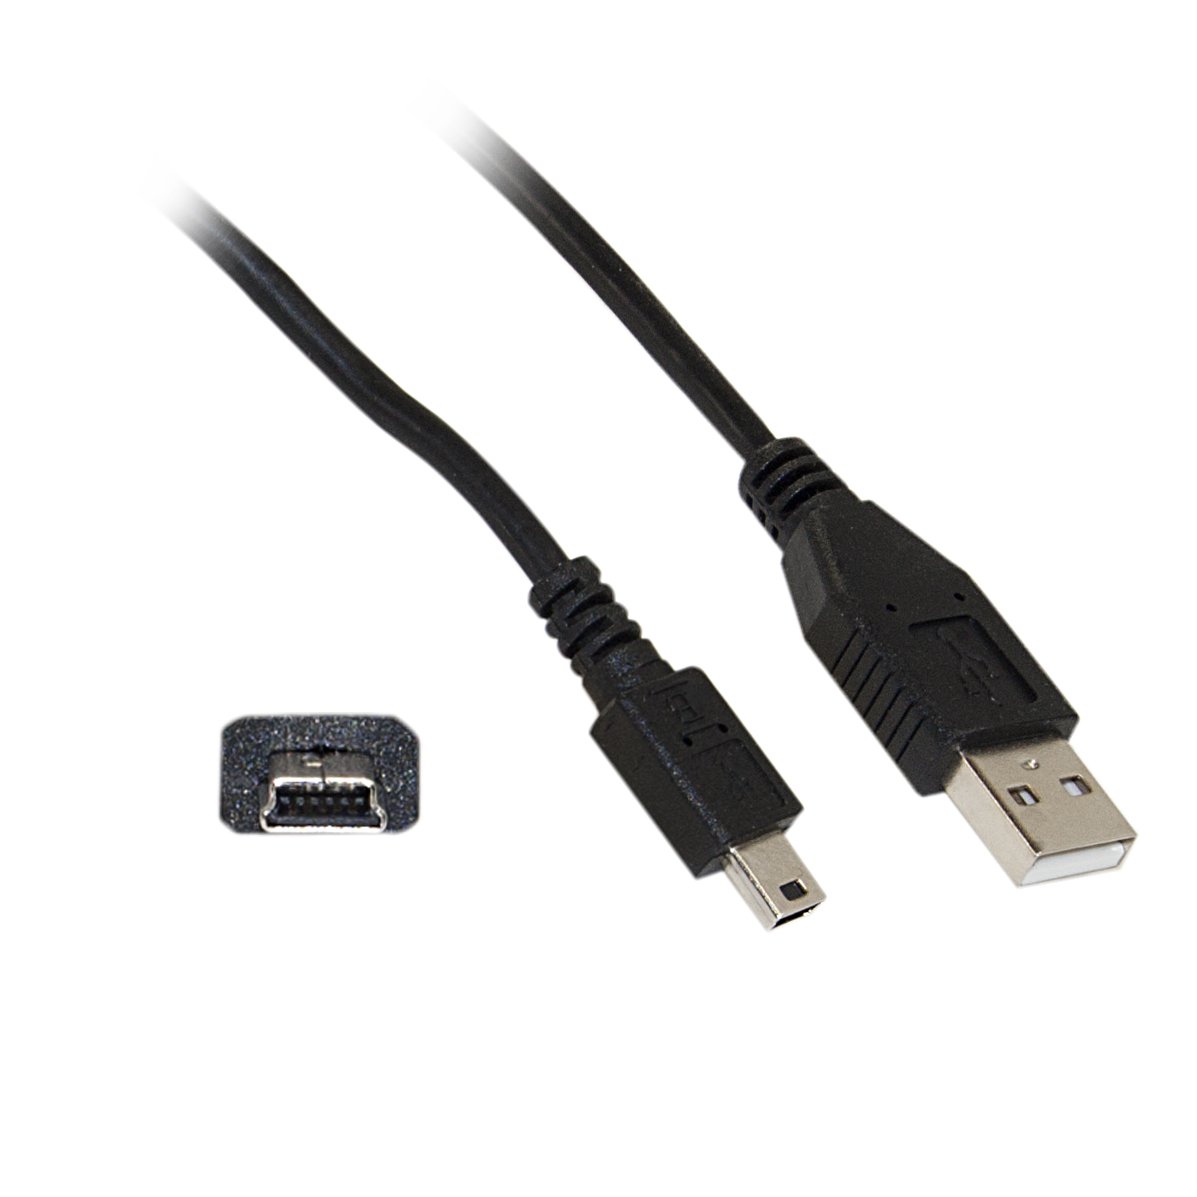 Mini USB 2.0 Cable, Black, Type A Male to 5 Pin Mini-B Male, 15 foot